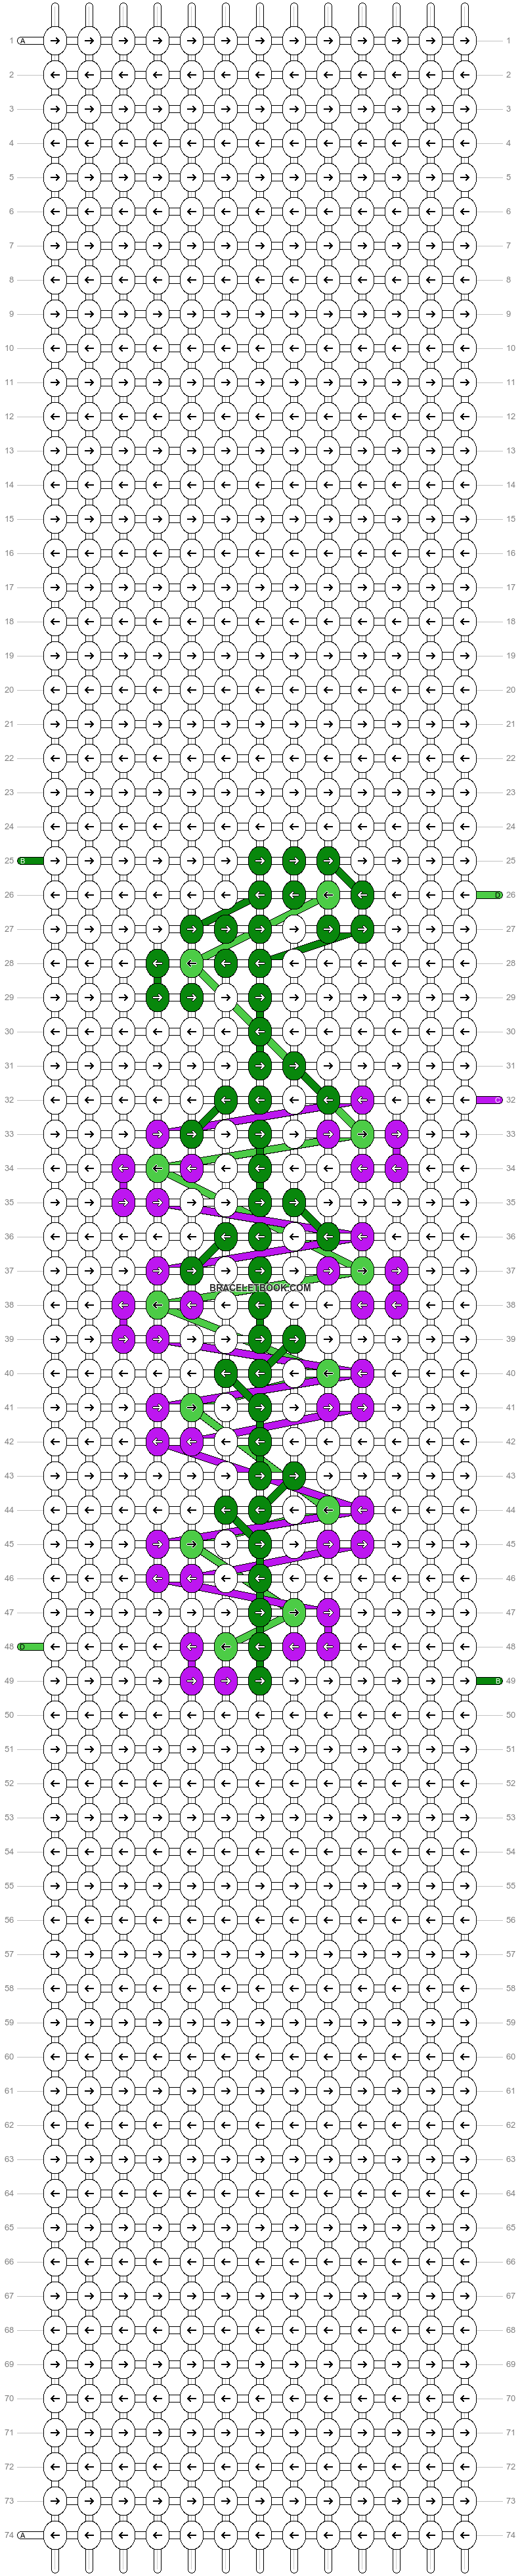 Alpha pattern #36712 variation #37486 pattern